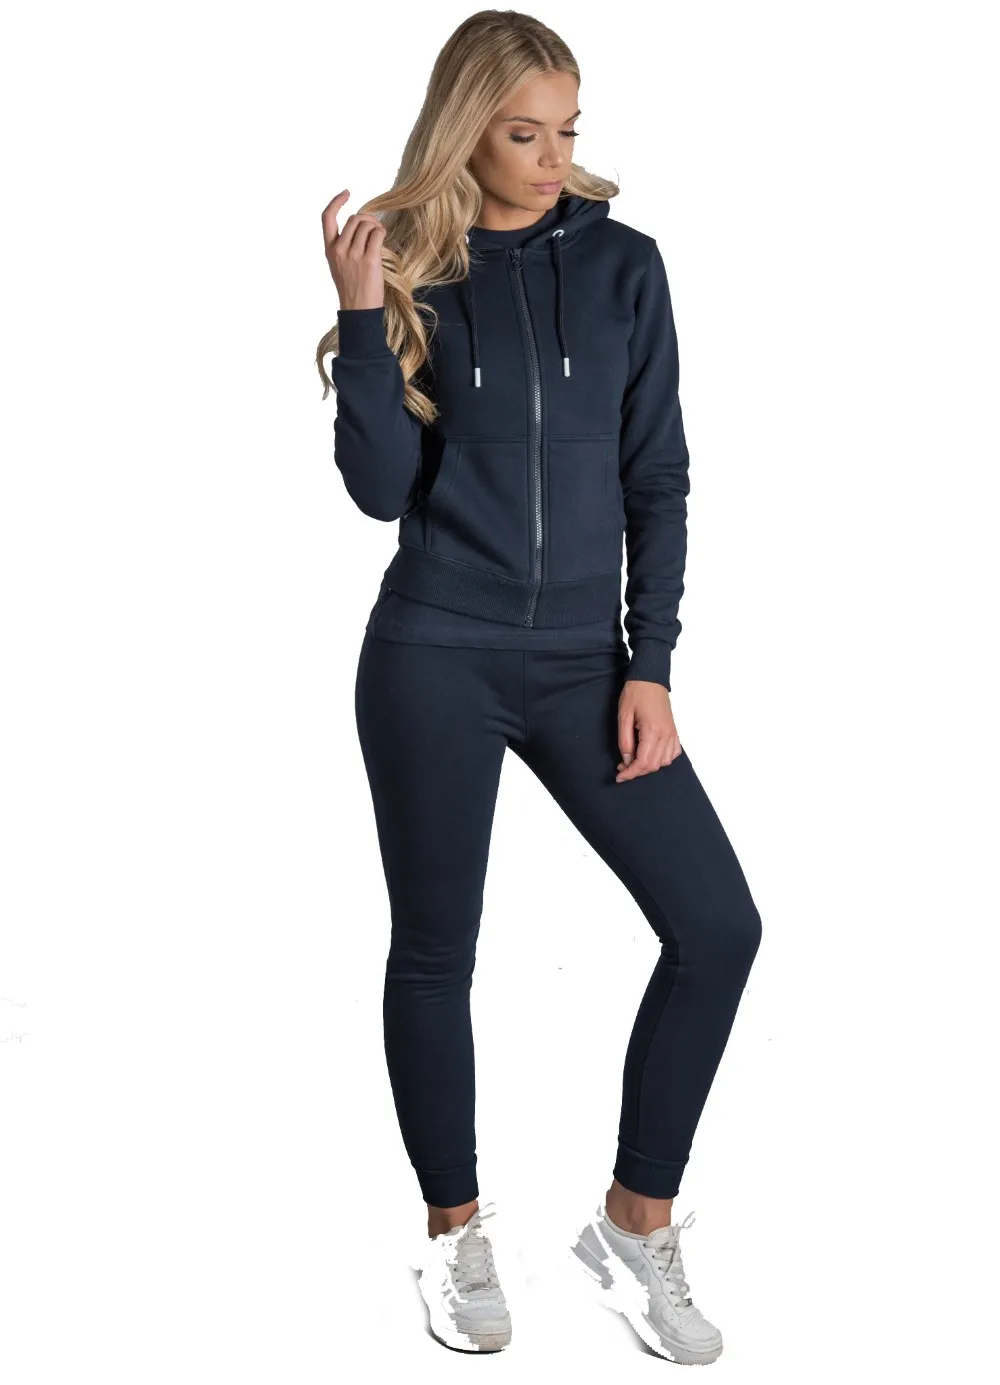 Top Newest Stylish Slim Fit 2019 Custom Wholesale Sweat Suits Women ...